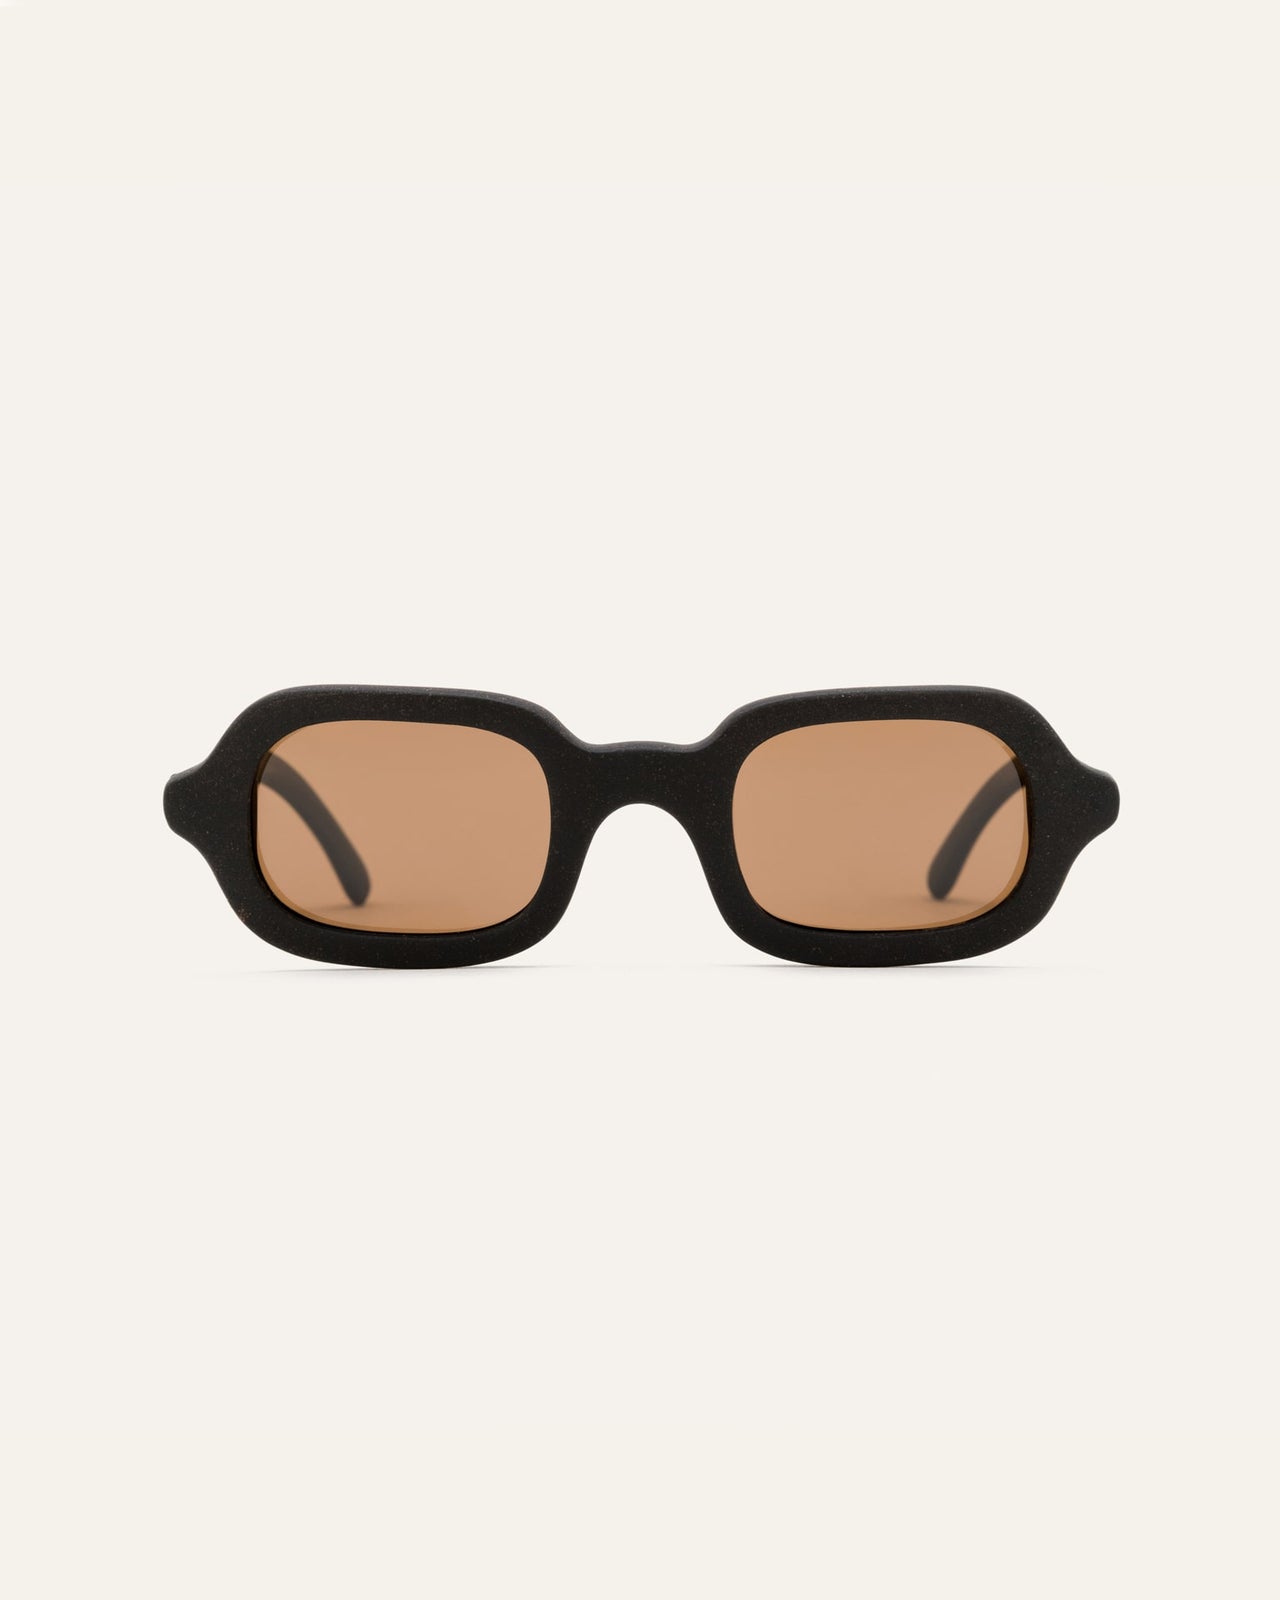 Tom Ford Sunglasses 0237 Snowdon 05B Black & Brown Smoke Gray Gradient |  eBay